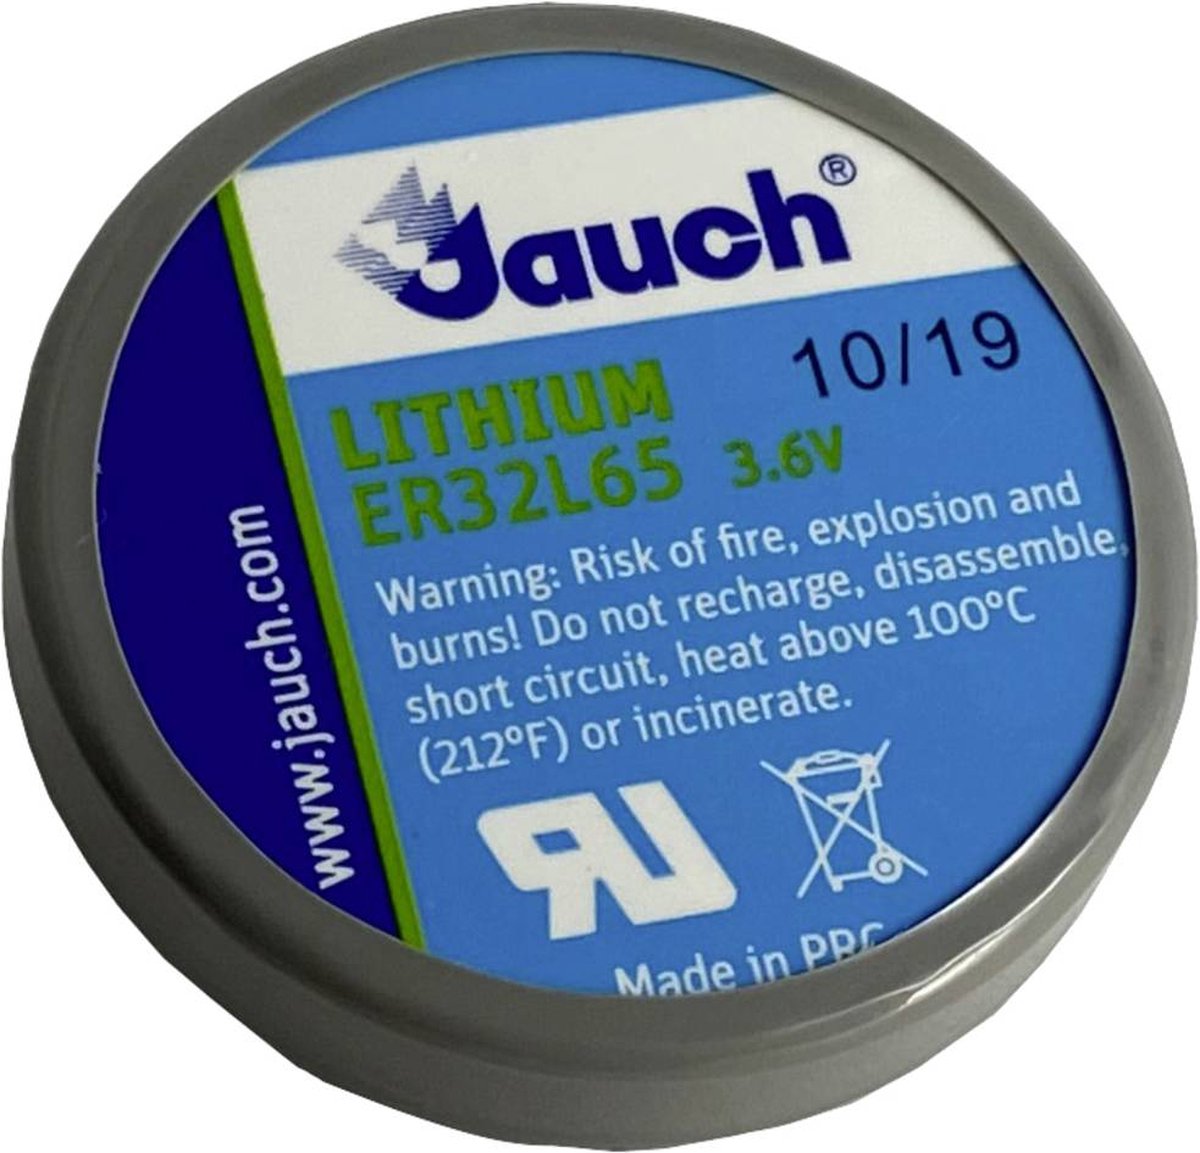 Jauch Quartz ER32L65J Speciale batterij 1/10 D Pin Lithium 3.6 V 1000 mAh 1 stuk(s)